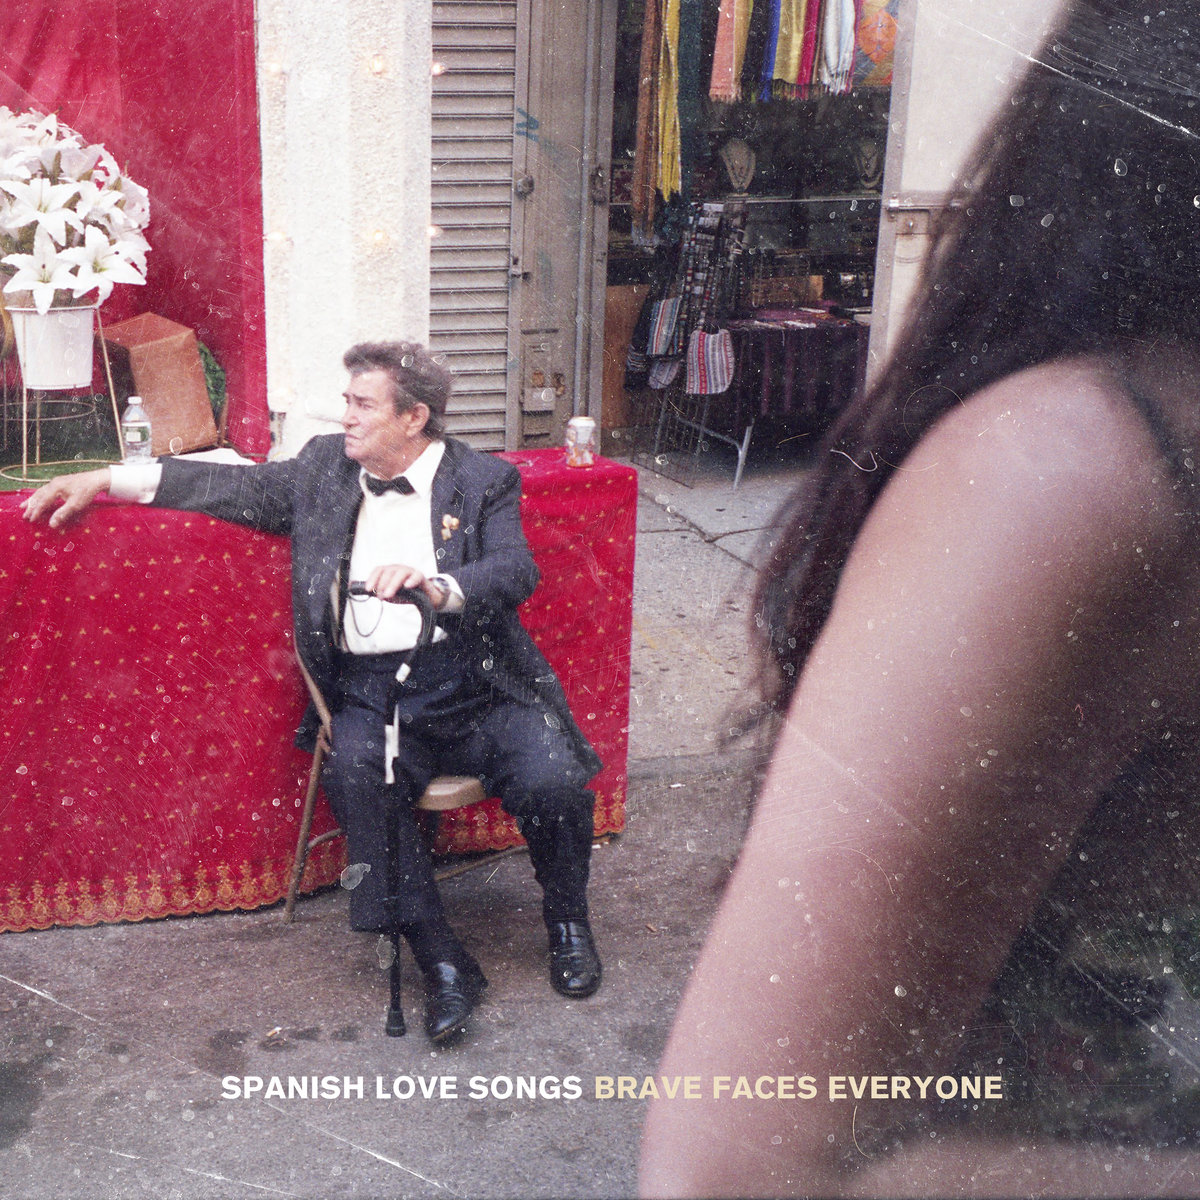 Spanish Love Songs Self Destruction (As a Sensible Career Choice) cover artwork